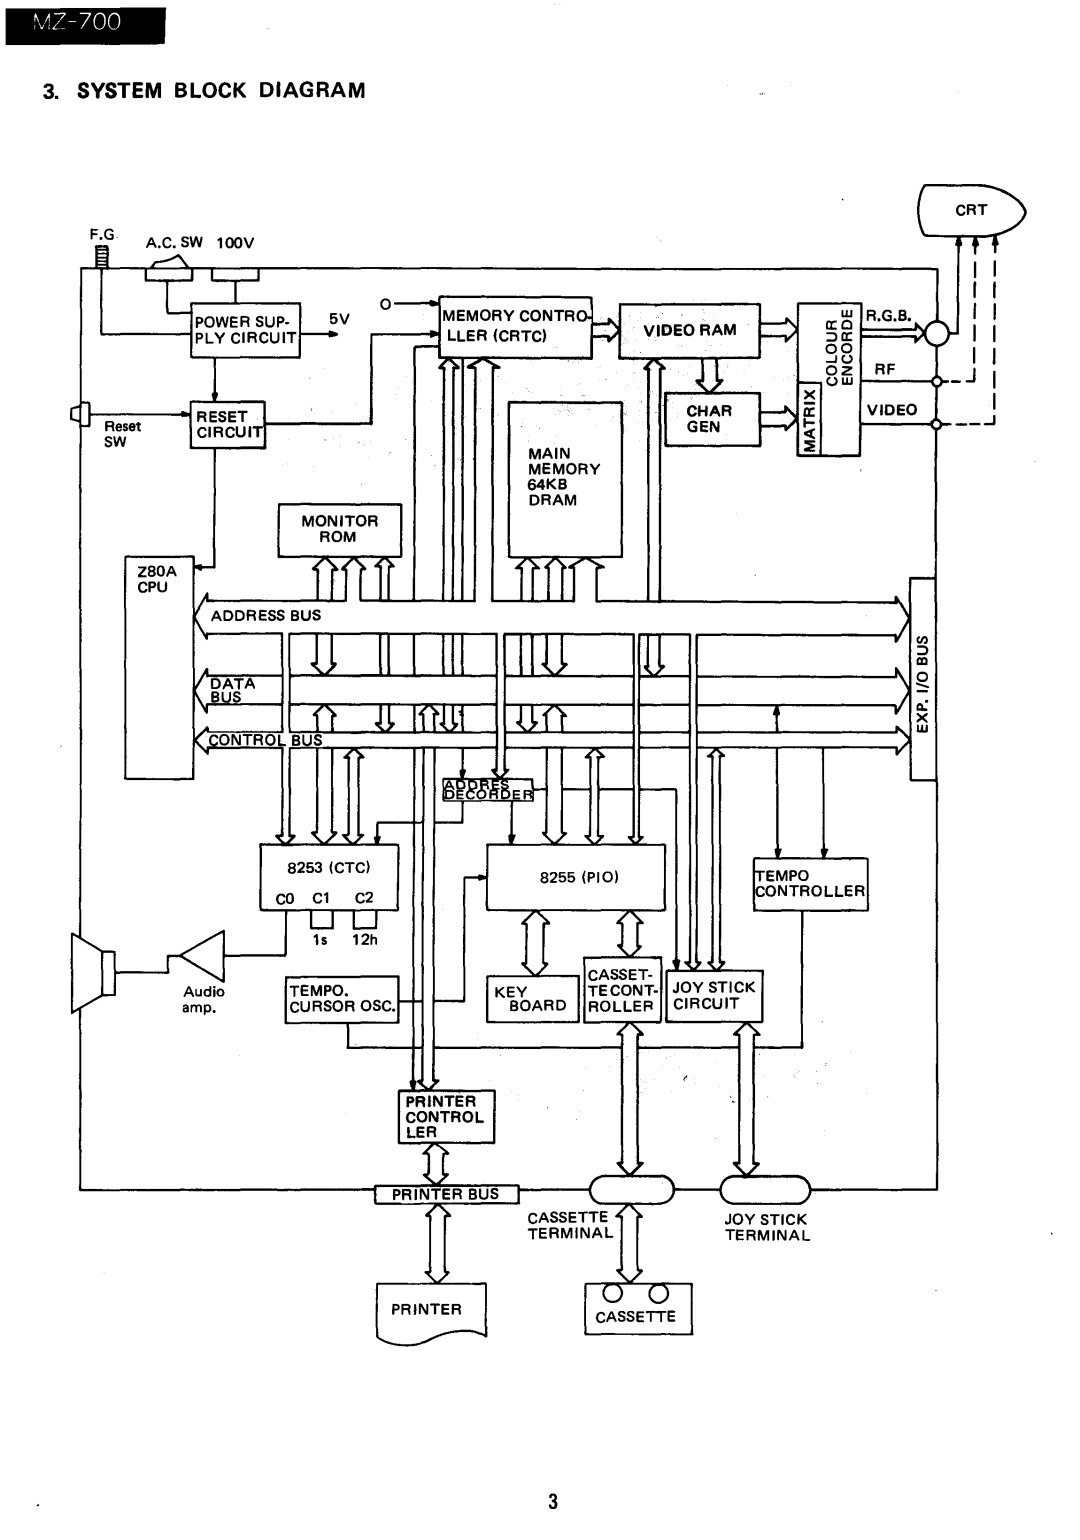 Sharp MZ-700 manual H rn, ~Po~Up, t\.0, t,J~, ~I?8m, System Block Diagram, ~dJA, ~q-700 